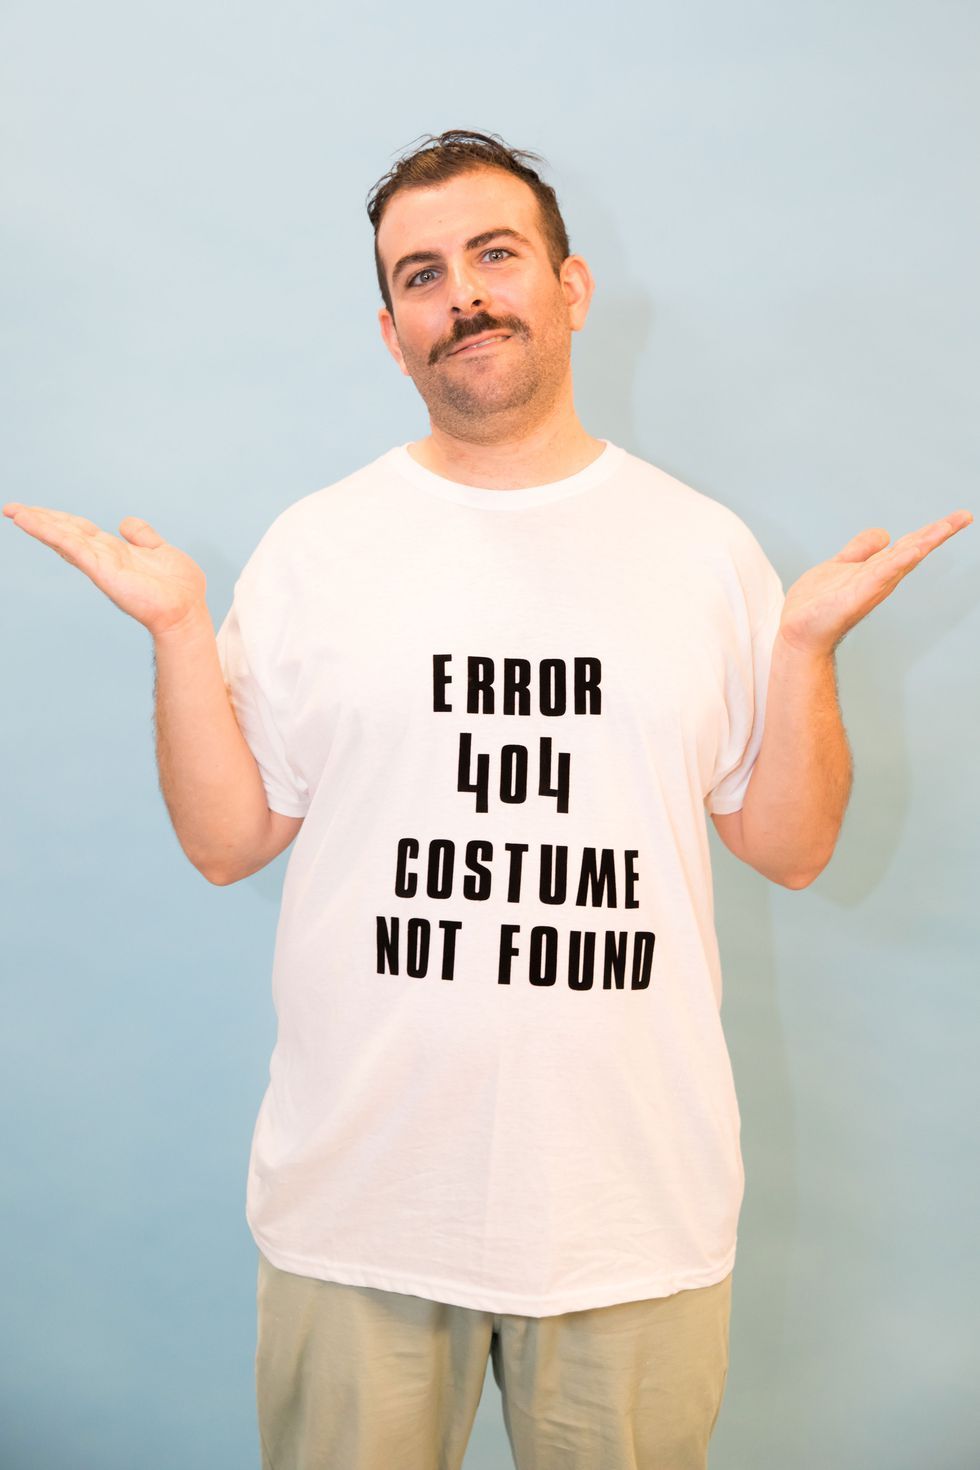 best mens halloween costume ideas  error 404